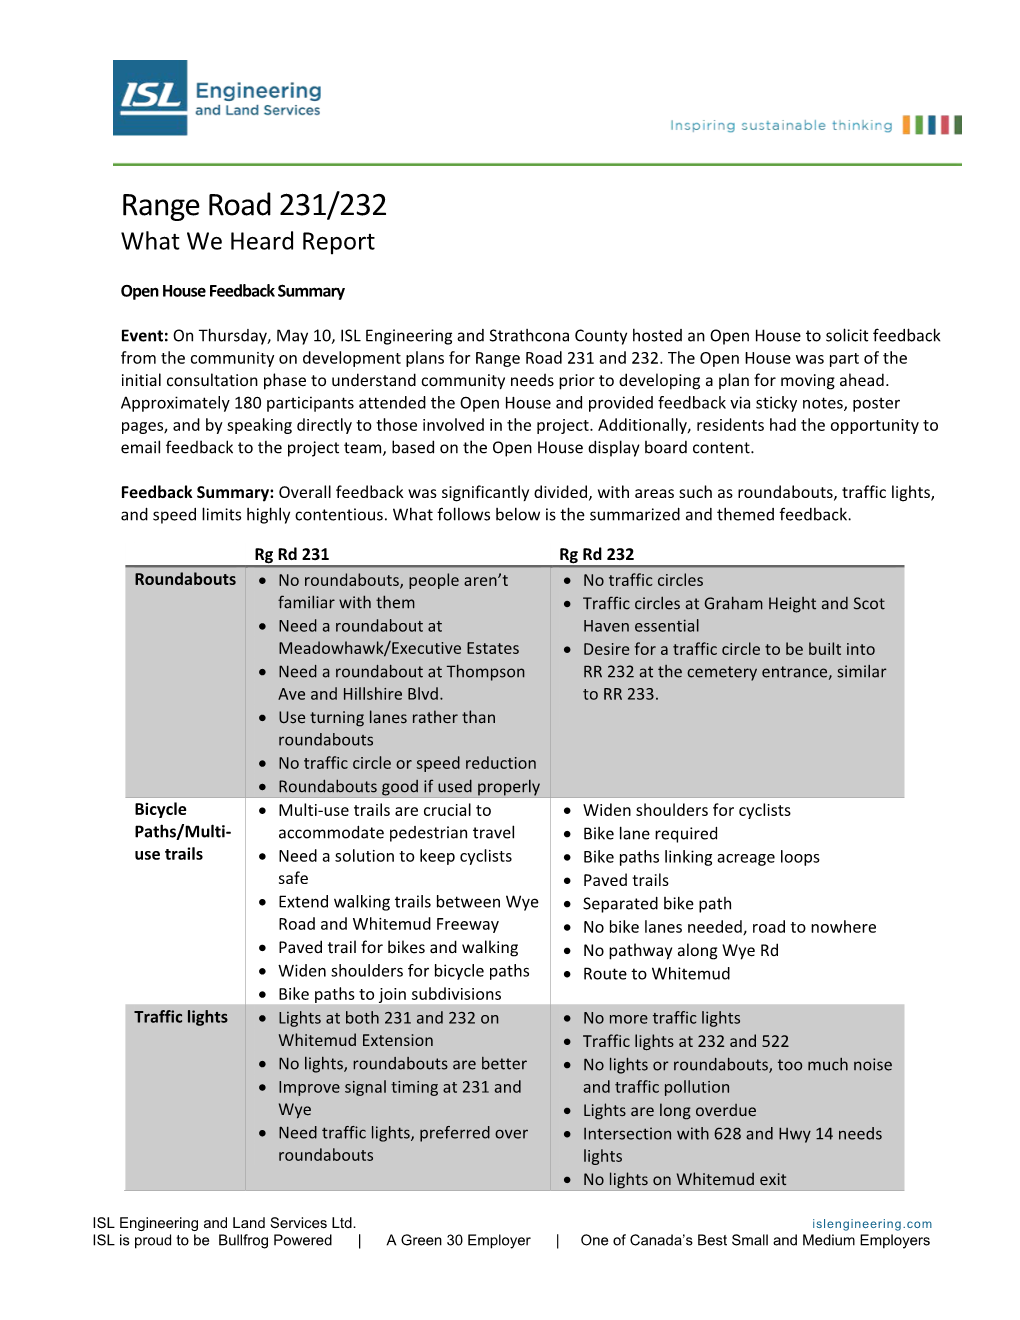 Range Road 231/232 What We Heard Report